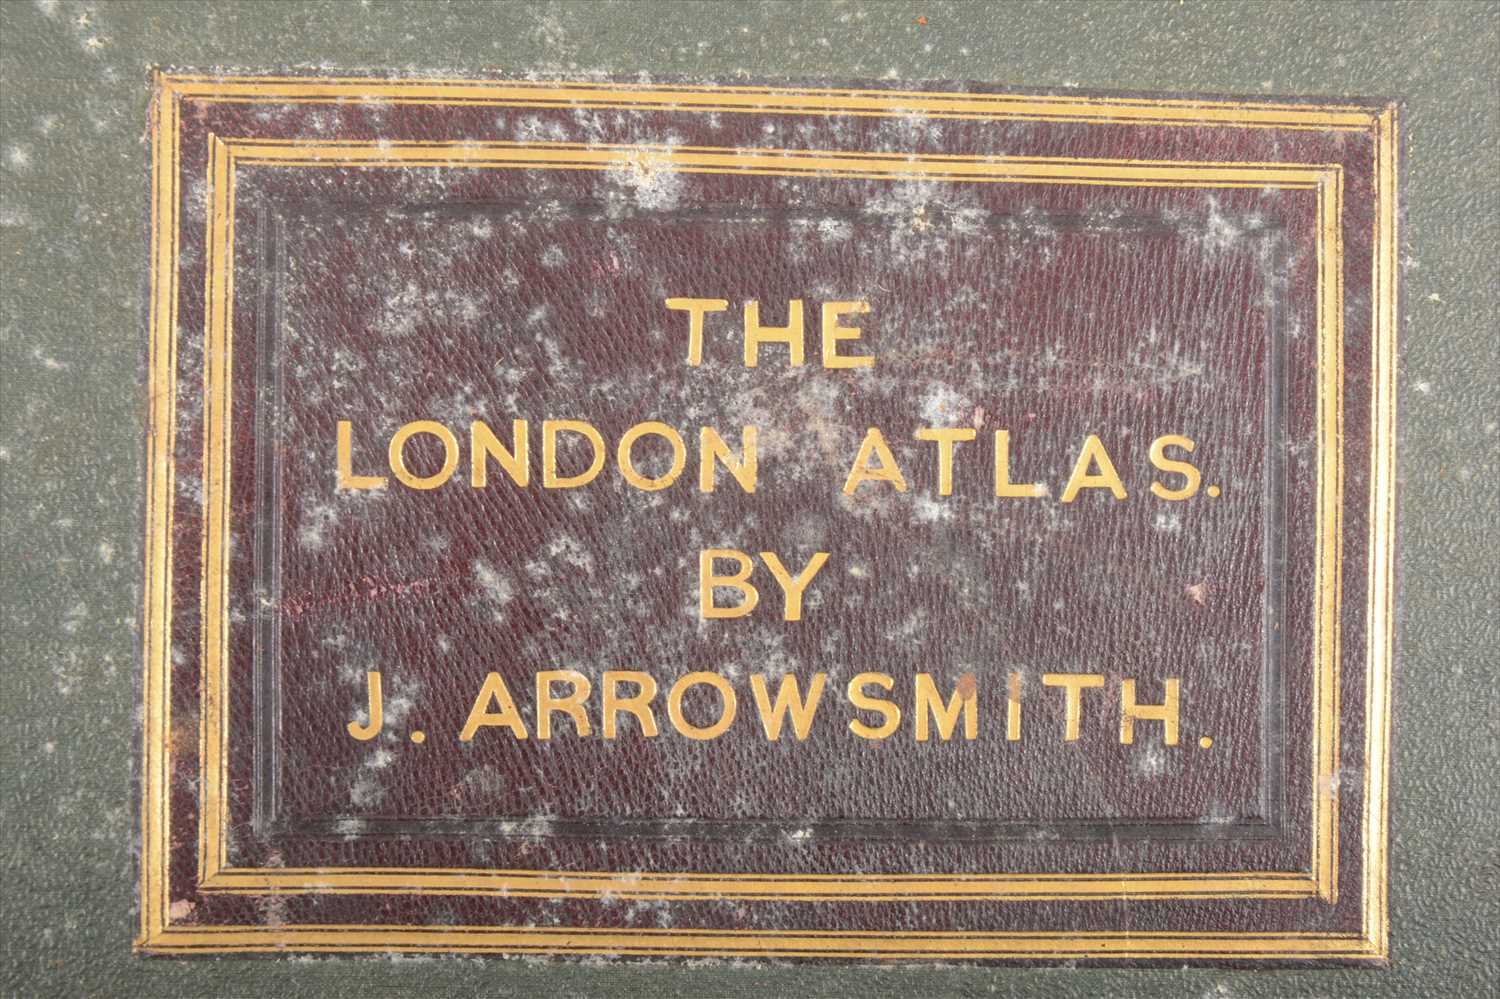 Lot 547 - Arrowsmith, John, The London Atlas of Universal Geography, circa 1840.